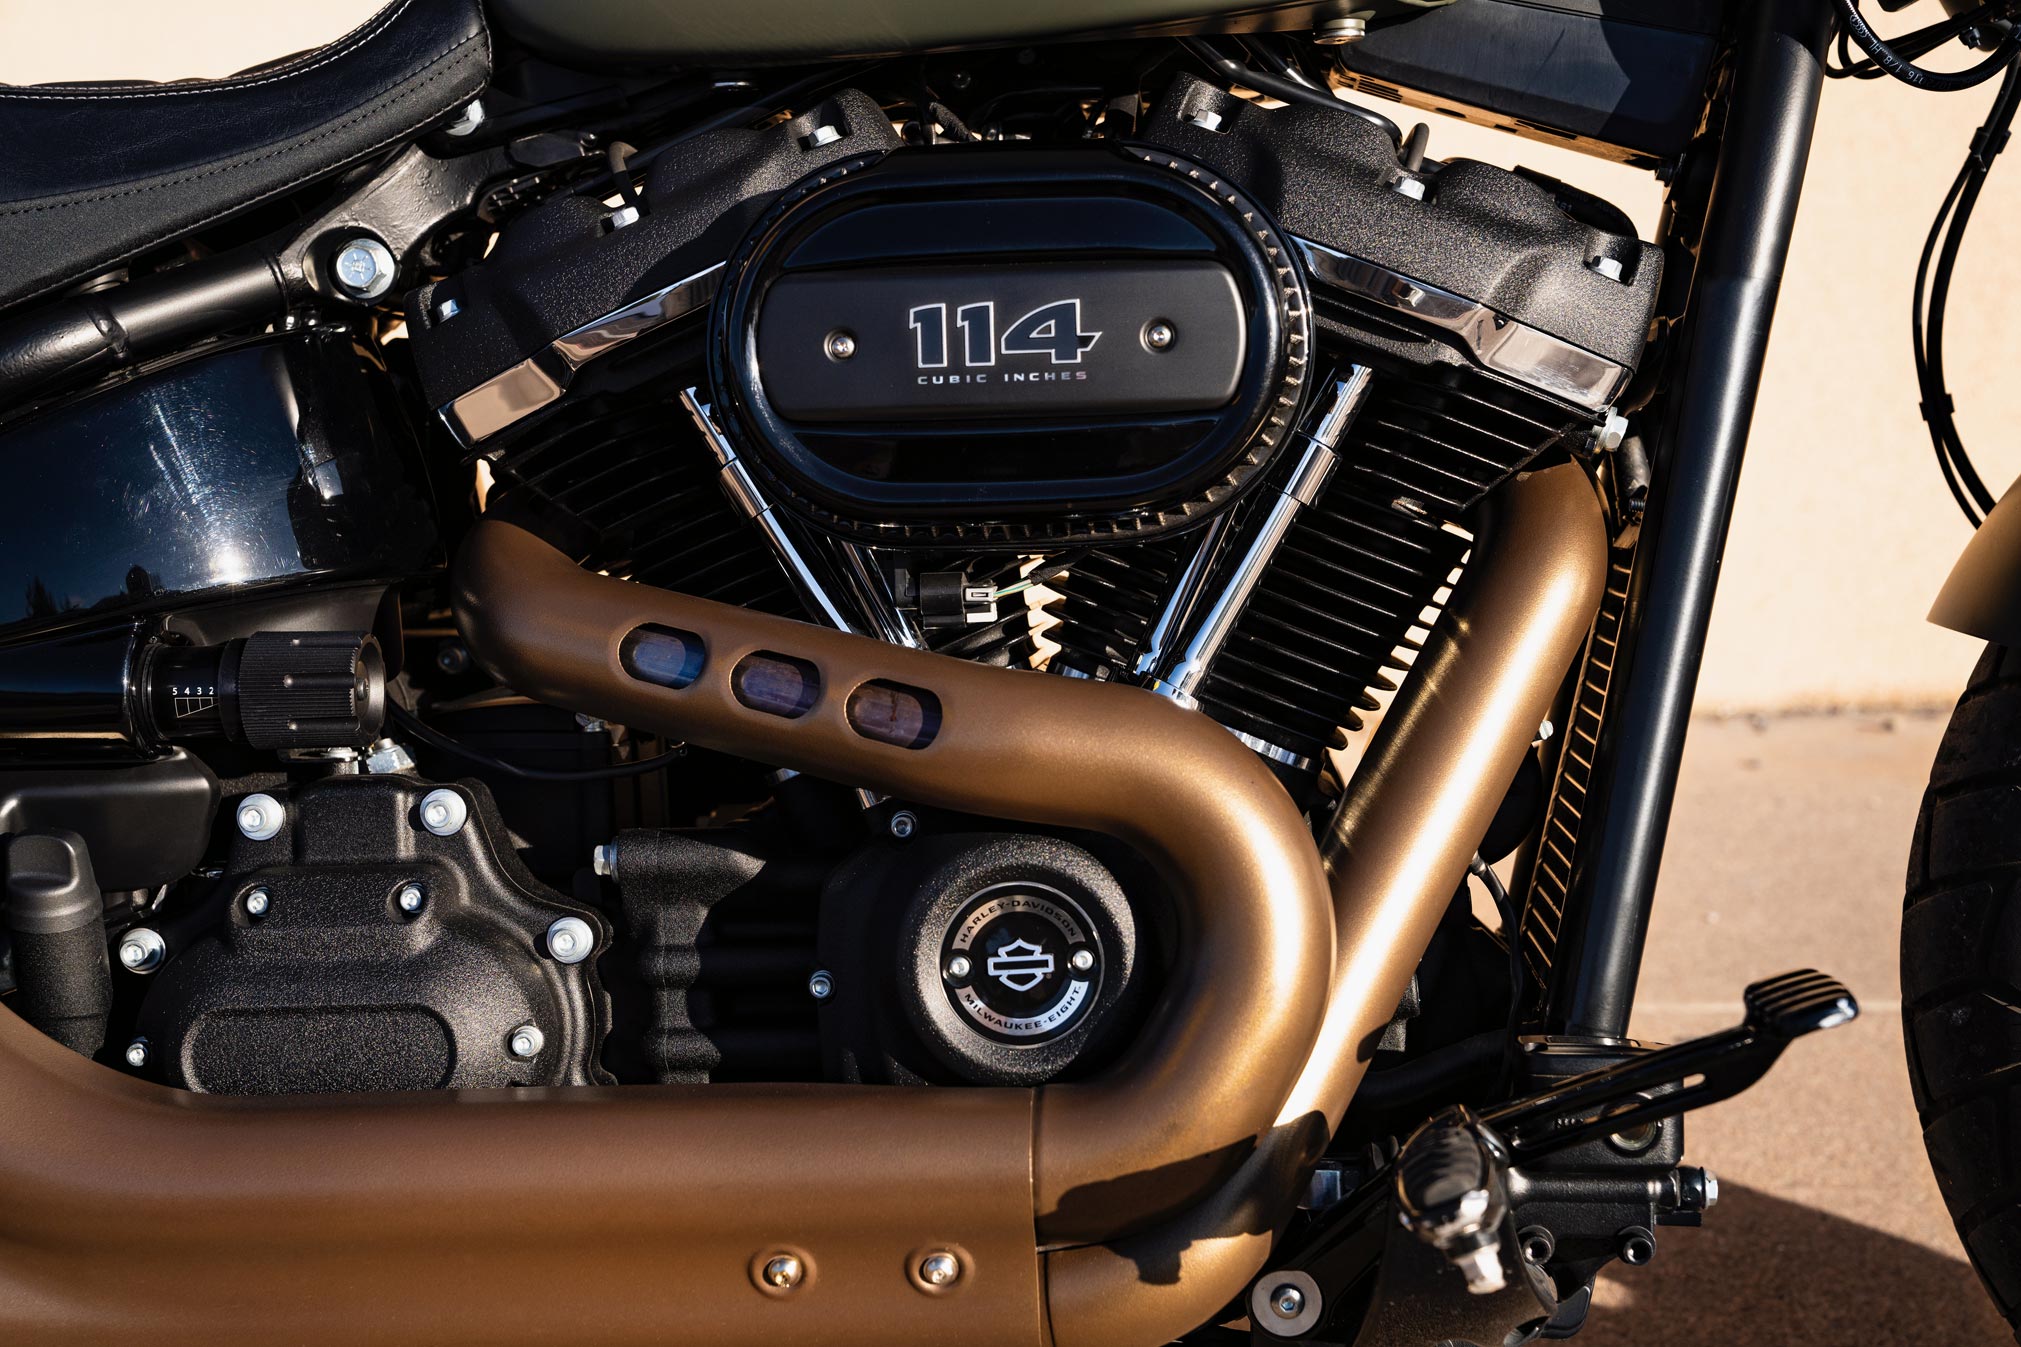 2021 Harley Davidson Fat Bob 114 Guide Total Motorcycle